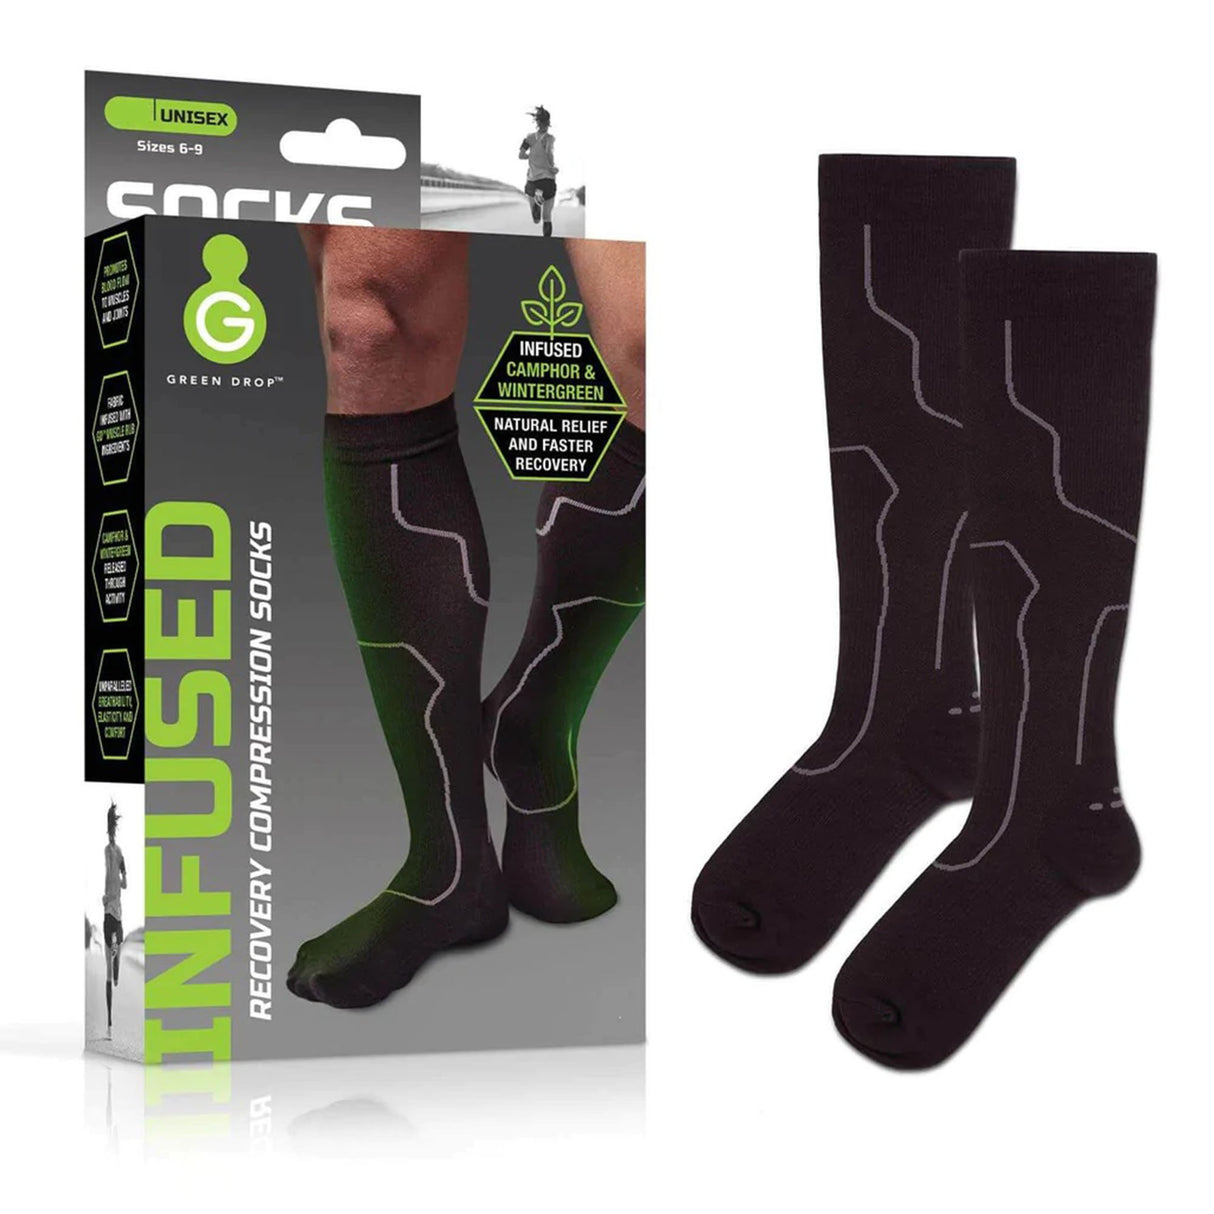 Green Drop Compression Socks - Medical-Grade Infused Support, L/XL